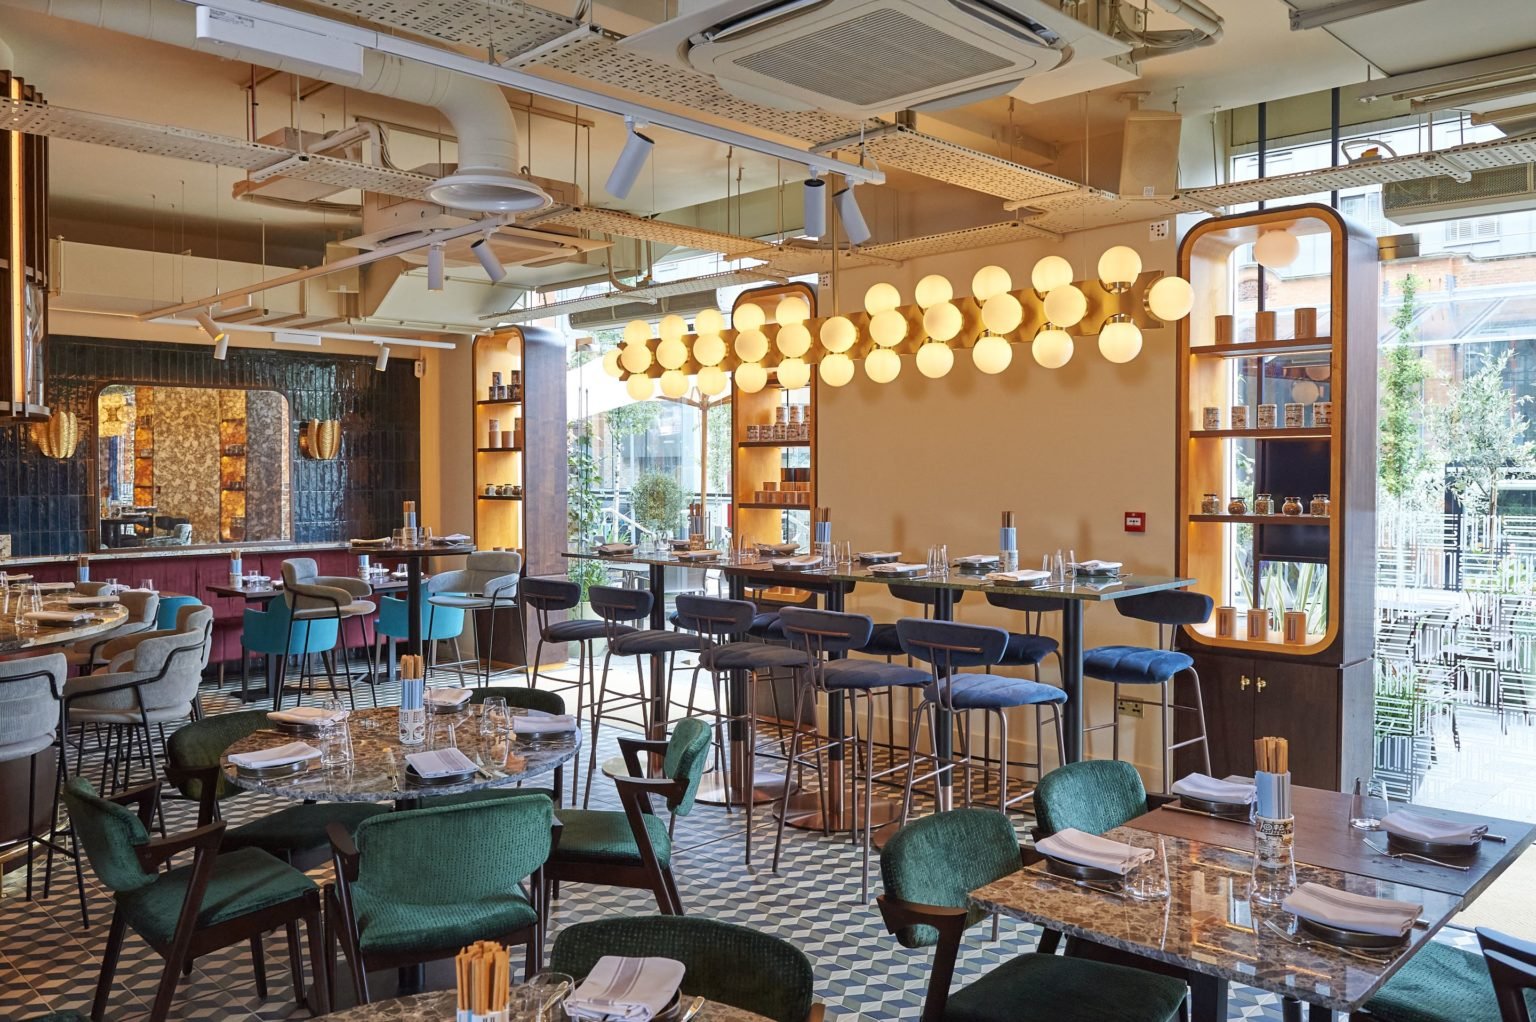 Jiji Restaurant, London - Restaurant Interior Design on Love That Design